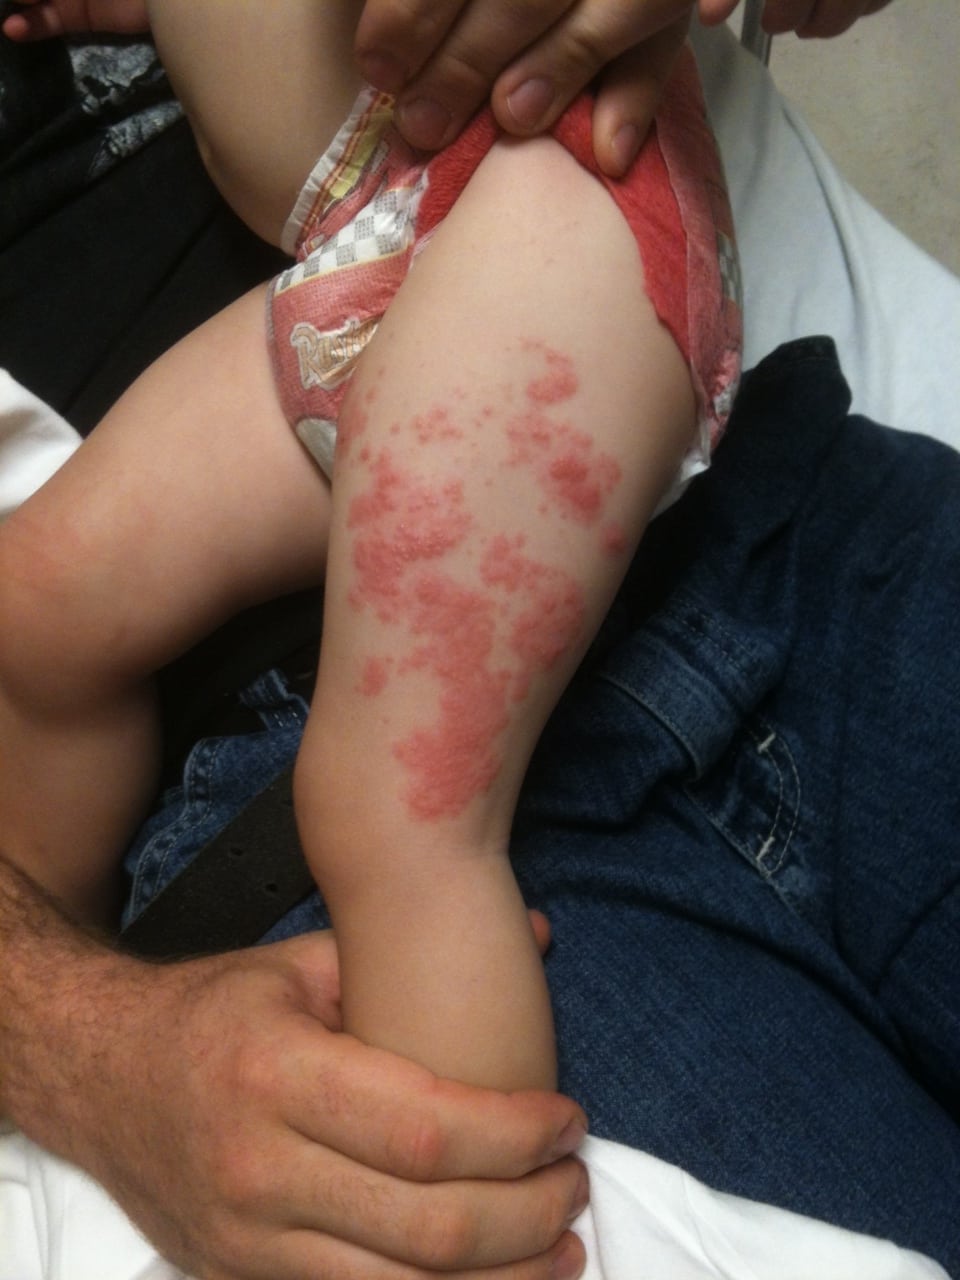 Pediatric Patient with a Rash